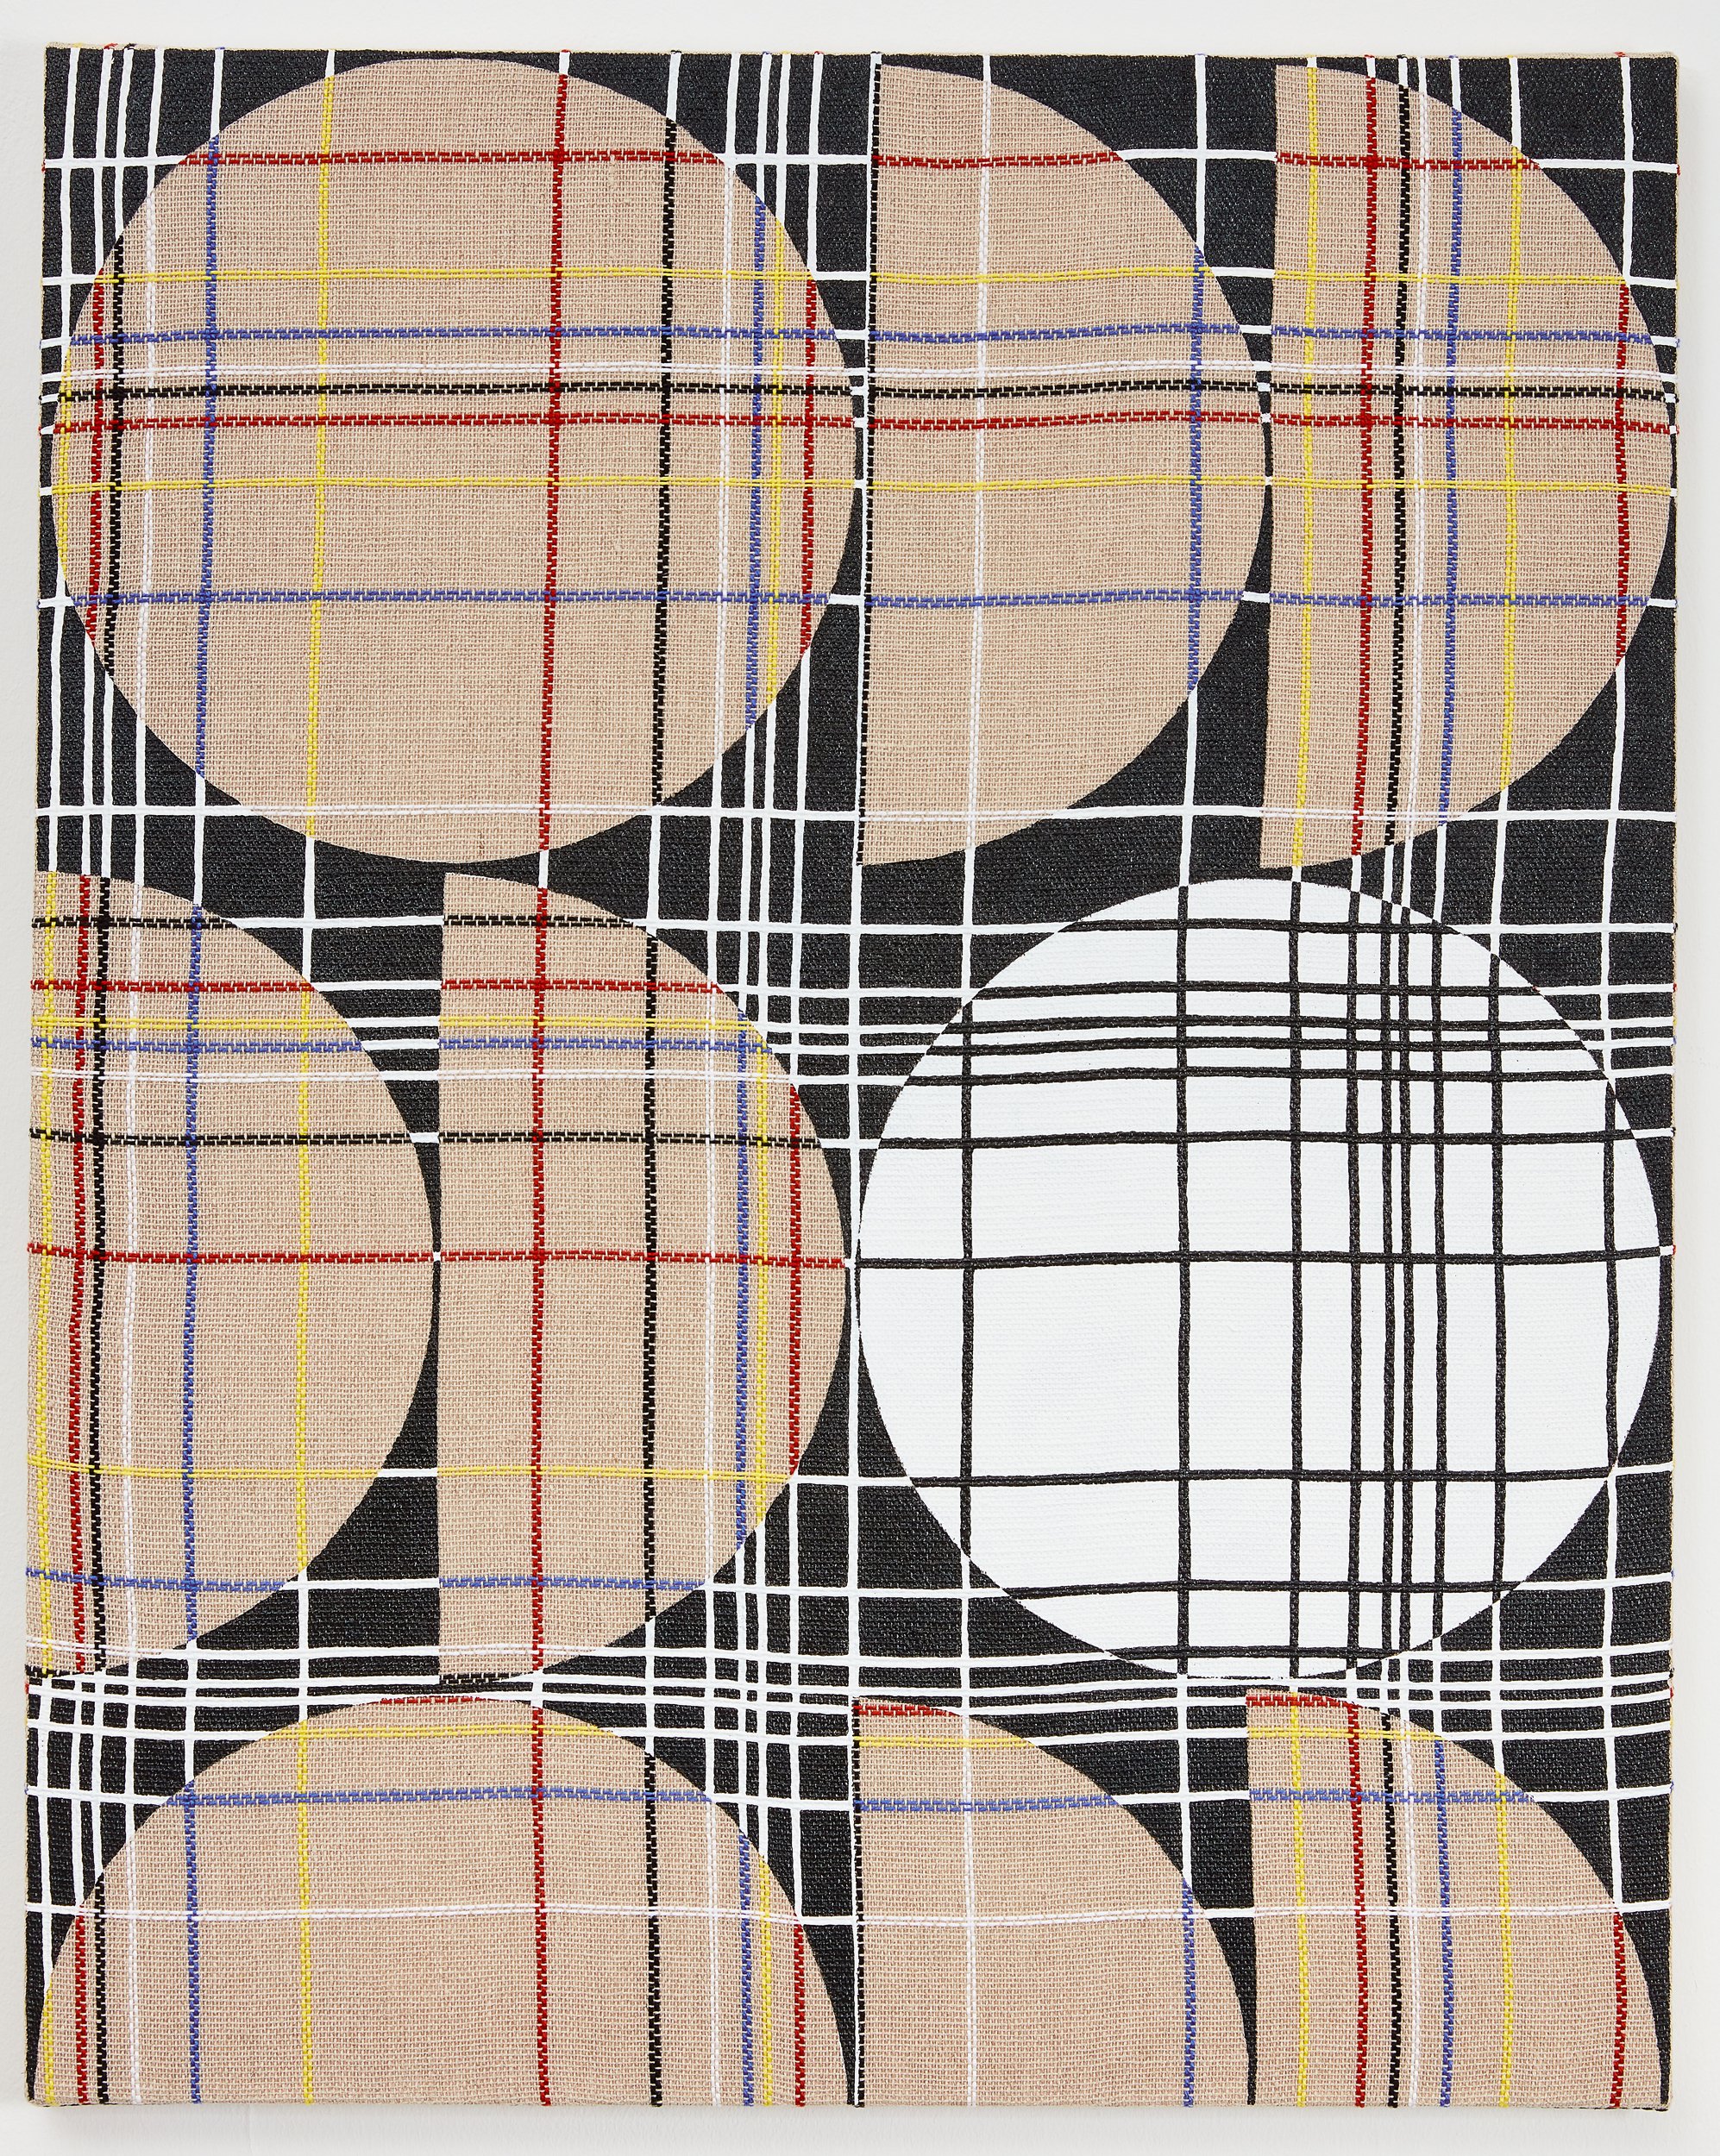 Samantha Bittman, Untitled, 2020, acrylic on hand-woven textile, 30 x 24 in, 76.2 x 61 cm, (SBi302529) LR